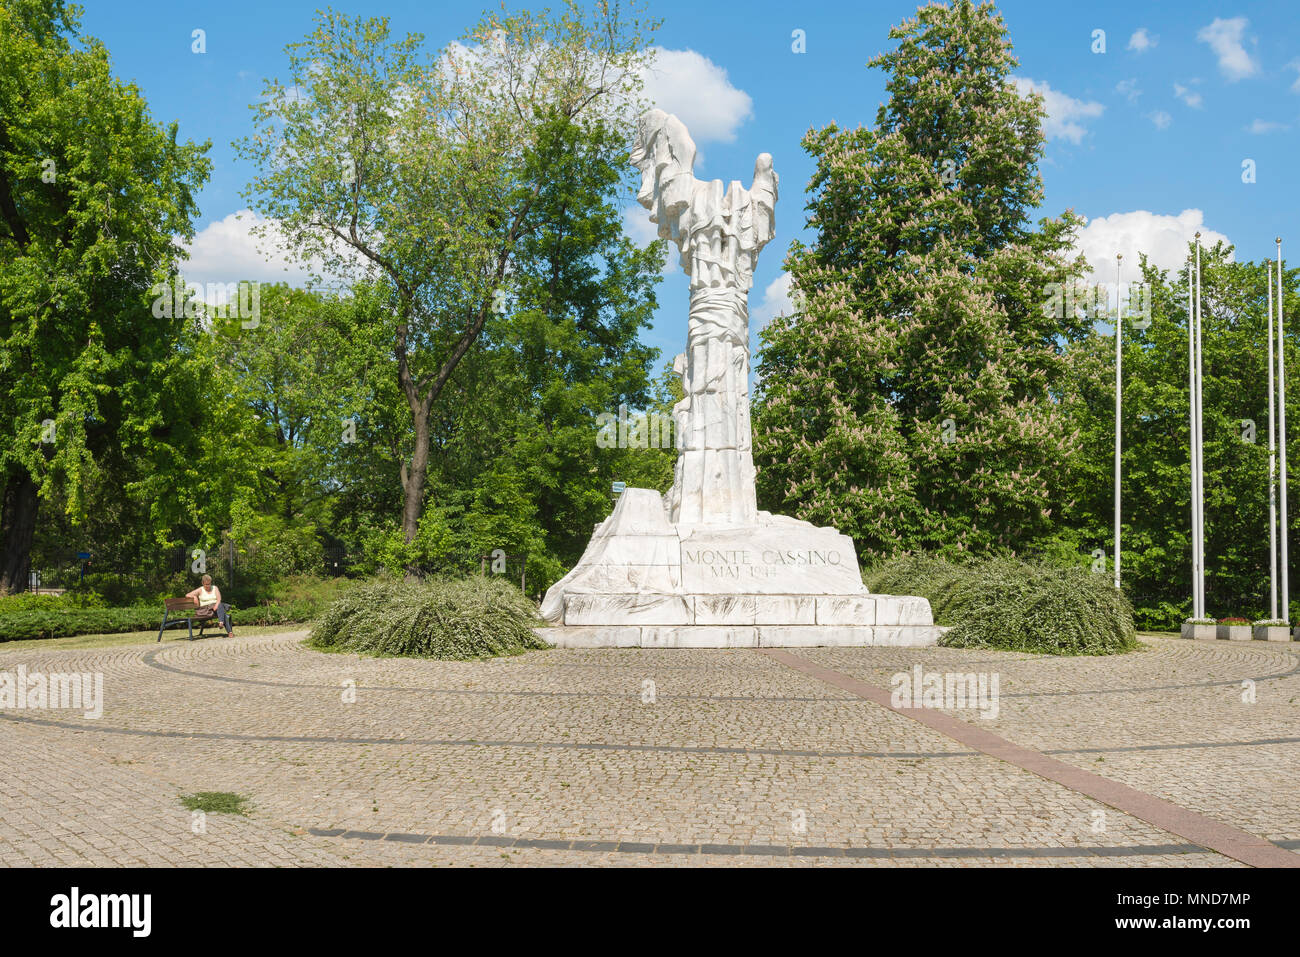 The Monte Cassino Monument sited in the Krasinski Gardens (Ogrod Krasinskich) in the center of Warsaw, Poland. Stock Photo